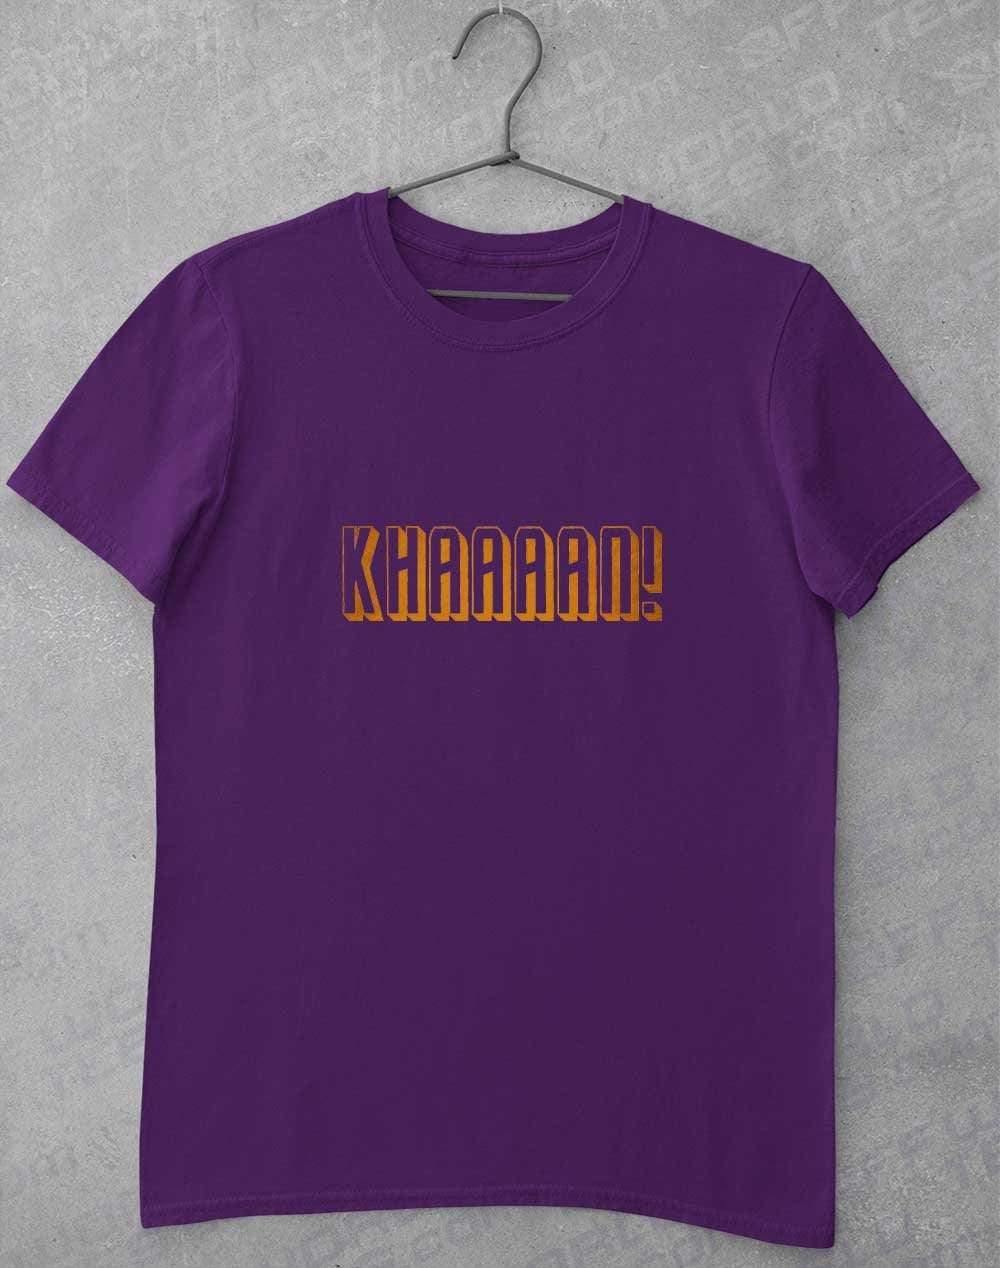 KHAAAAAN T-Shirt S / Purple  - Off World Tees